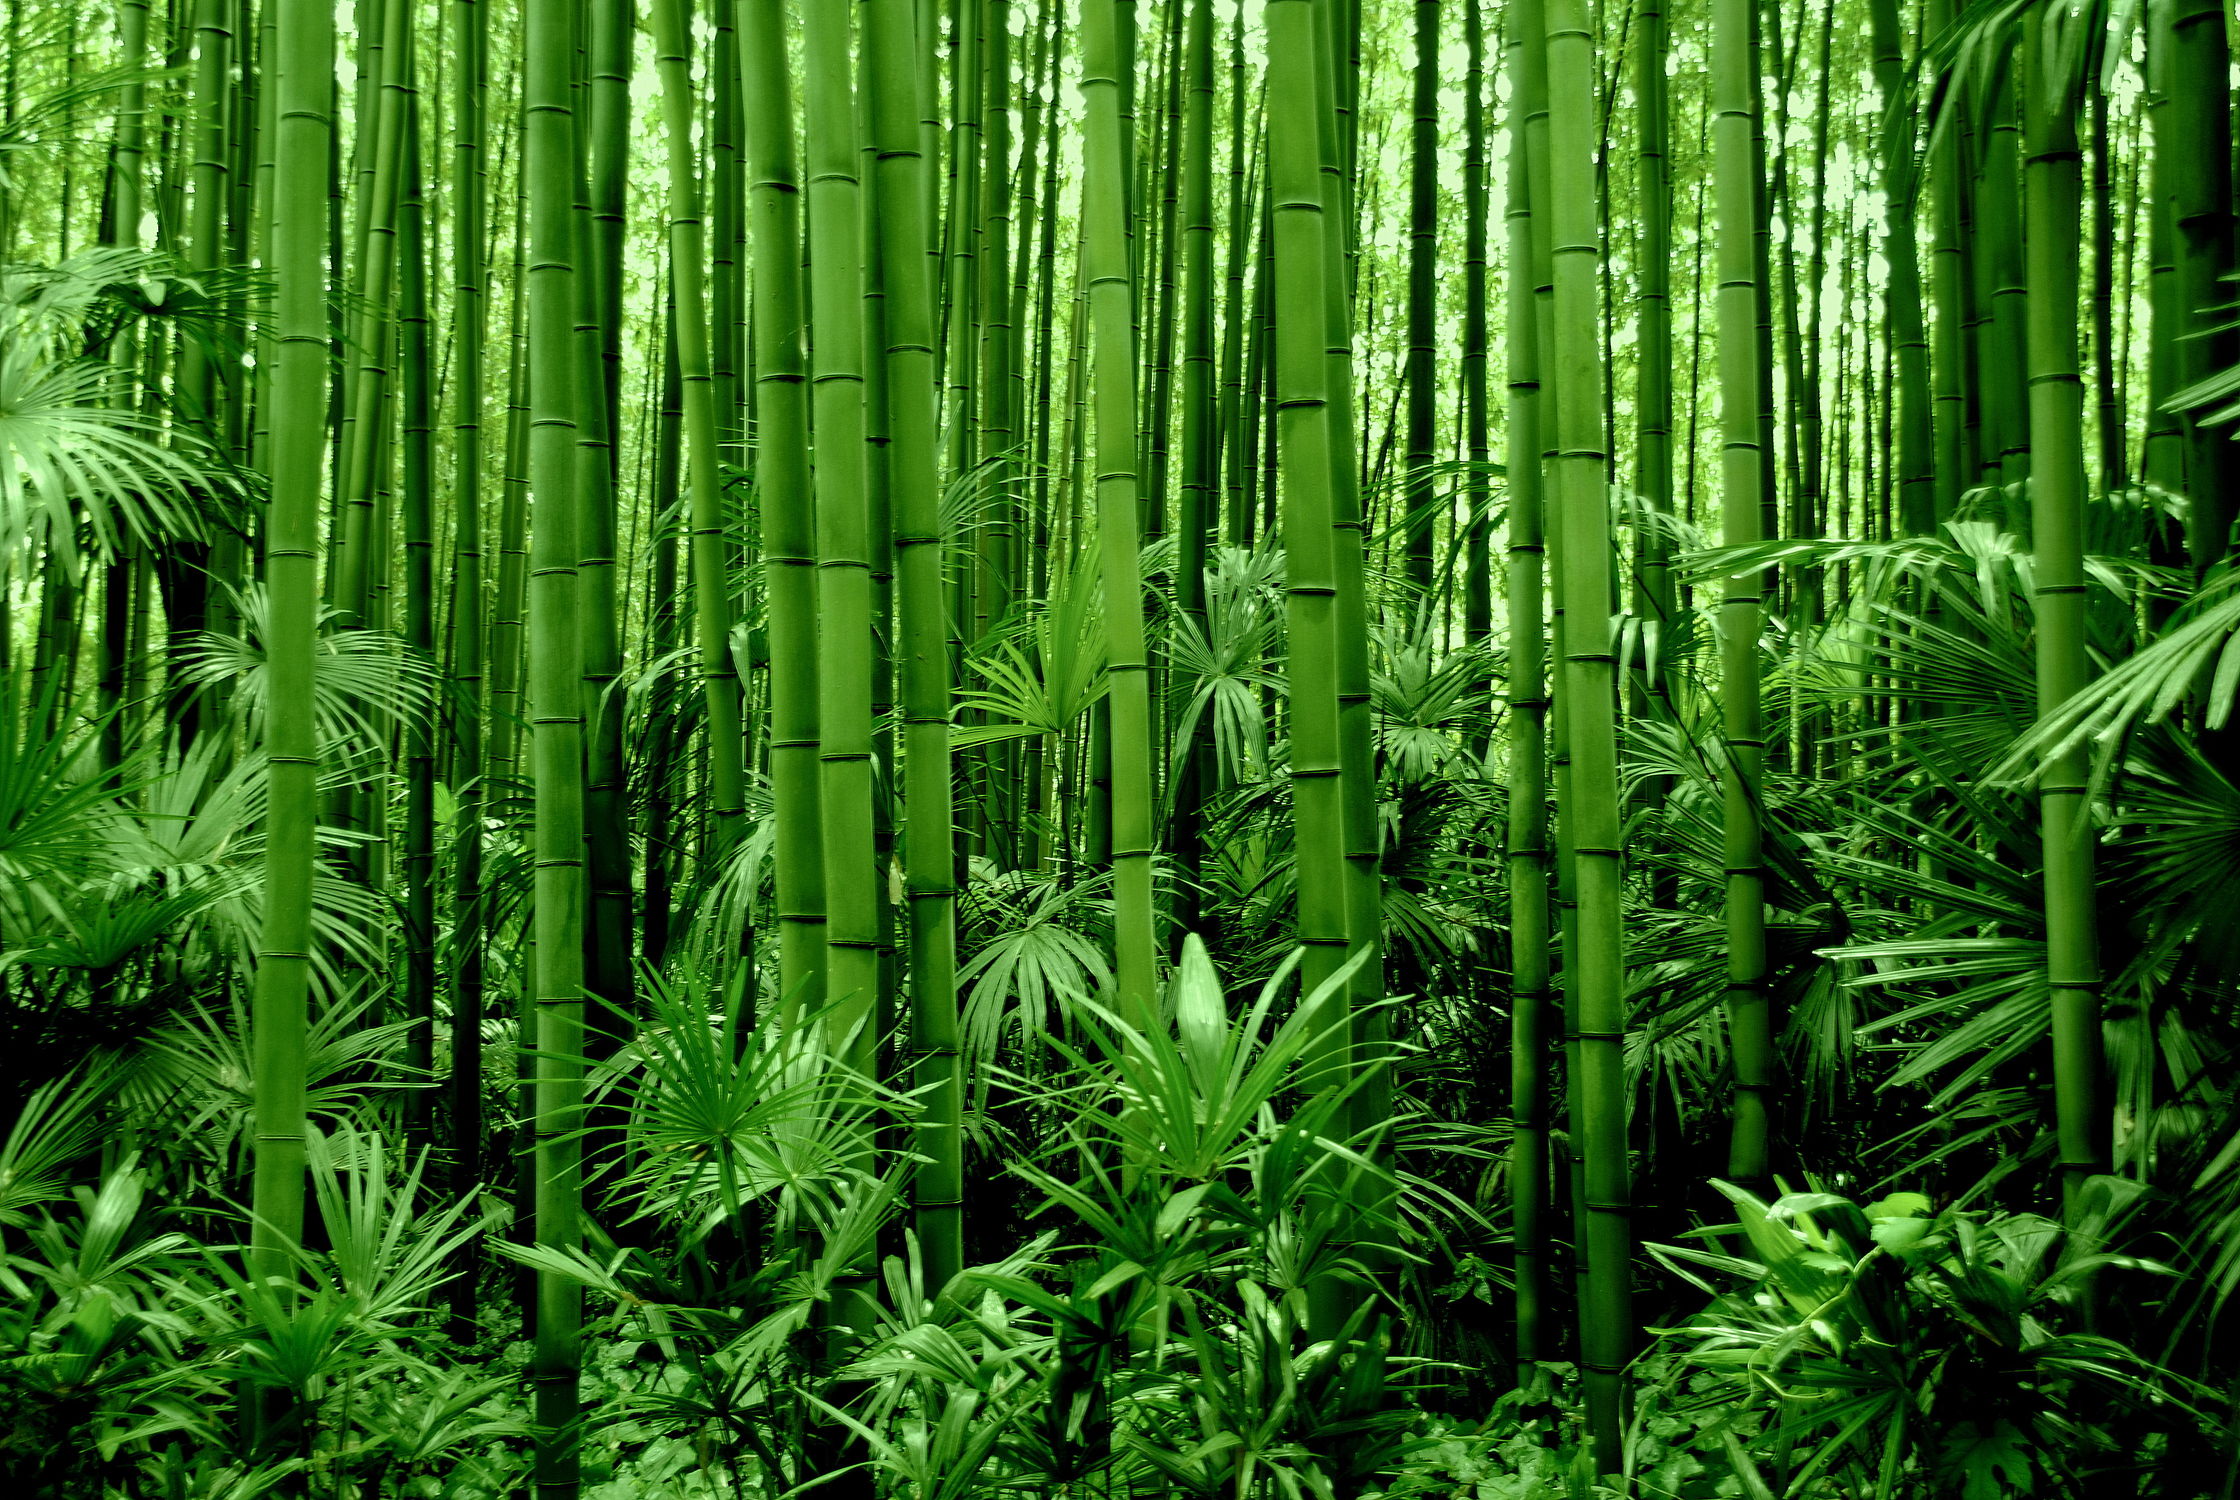 Bild mit Grün, Bambus, bamboo, Tapete, Tapeten Muster, Harmonie in Grün, wandtapete, fototapete, bambuswald